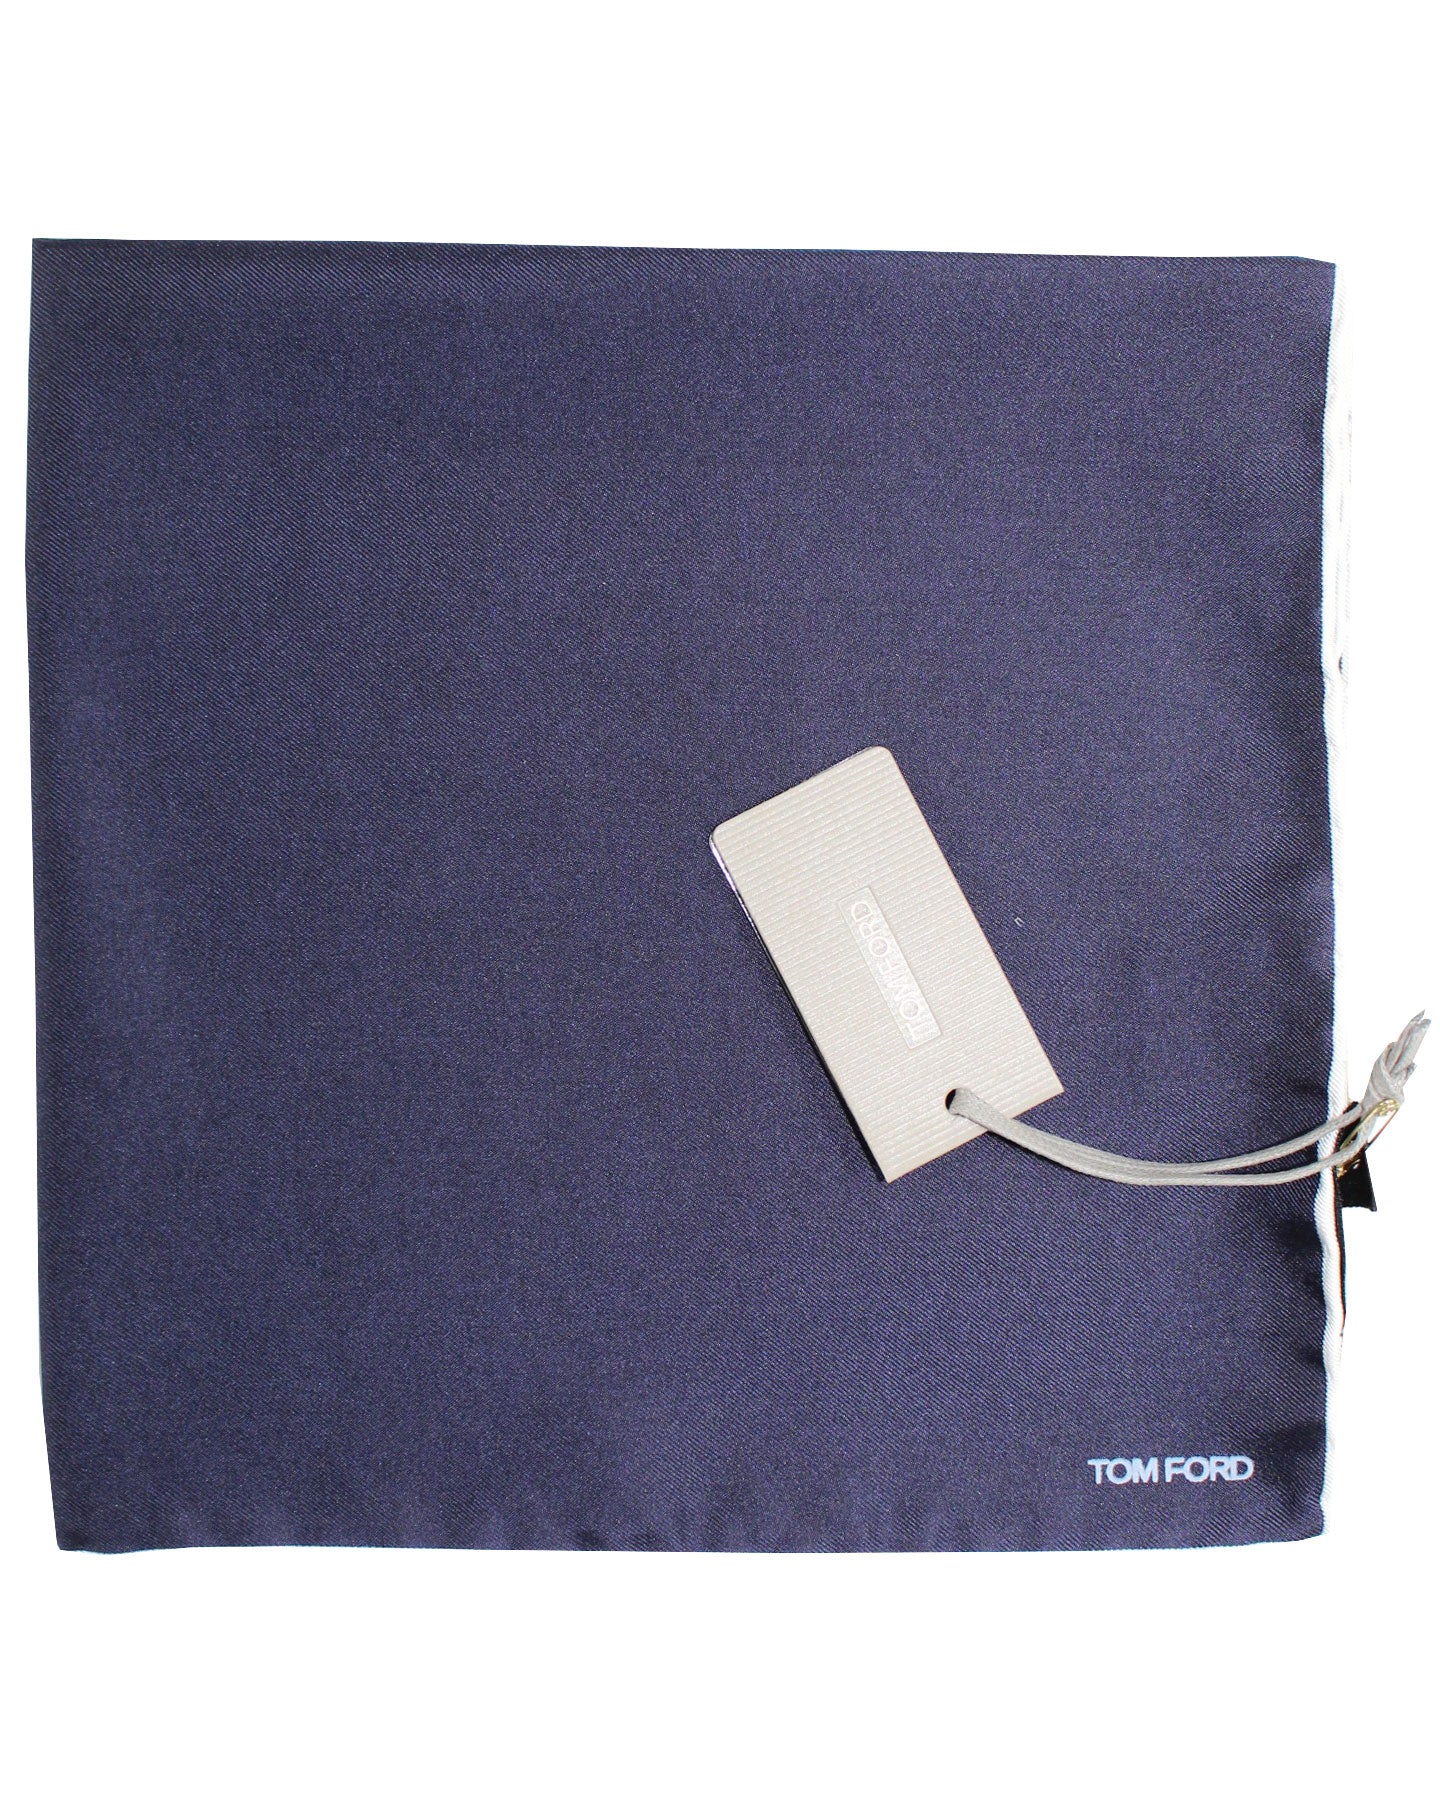 Tom Ford Pocket Square Dark Blue Solid